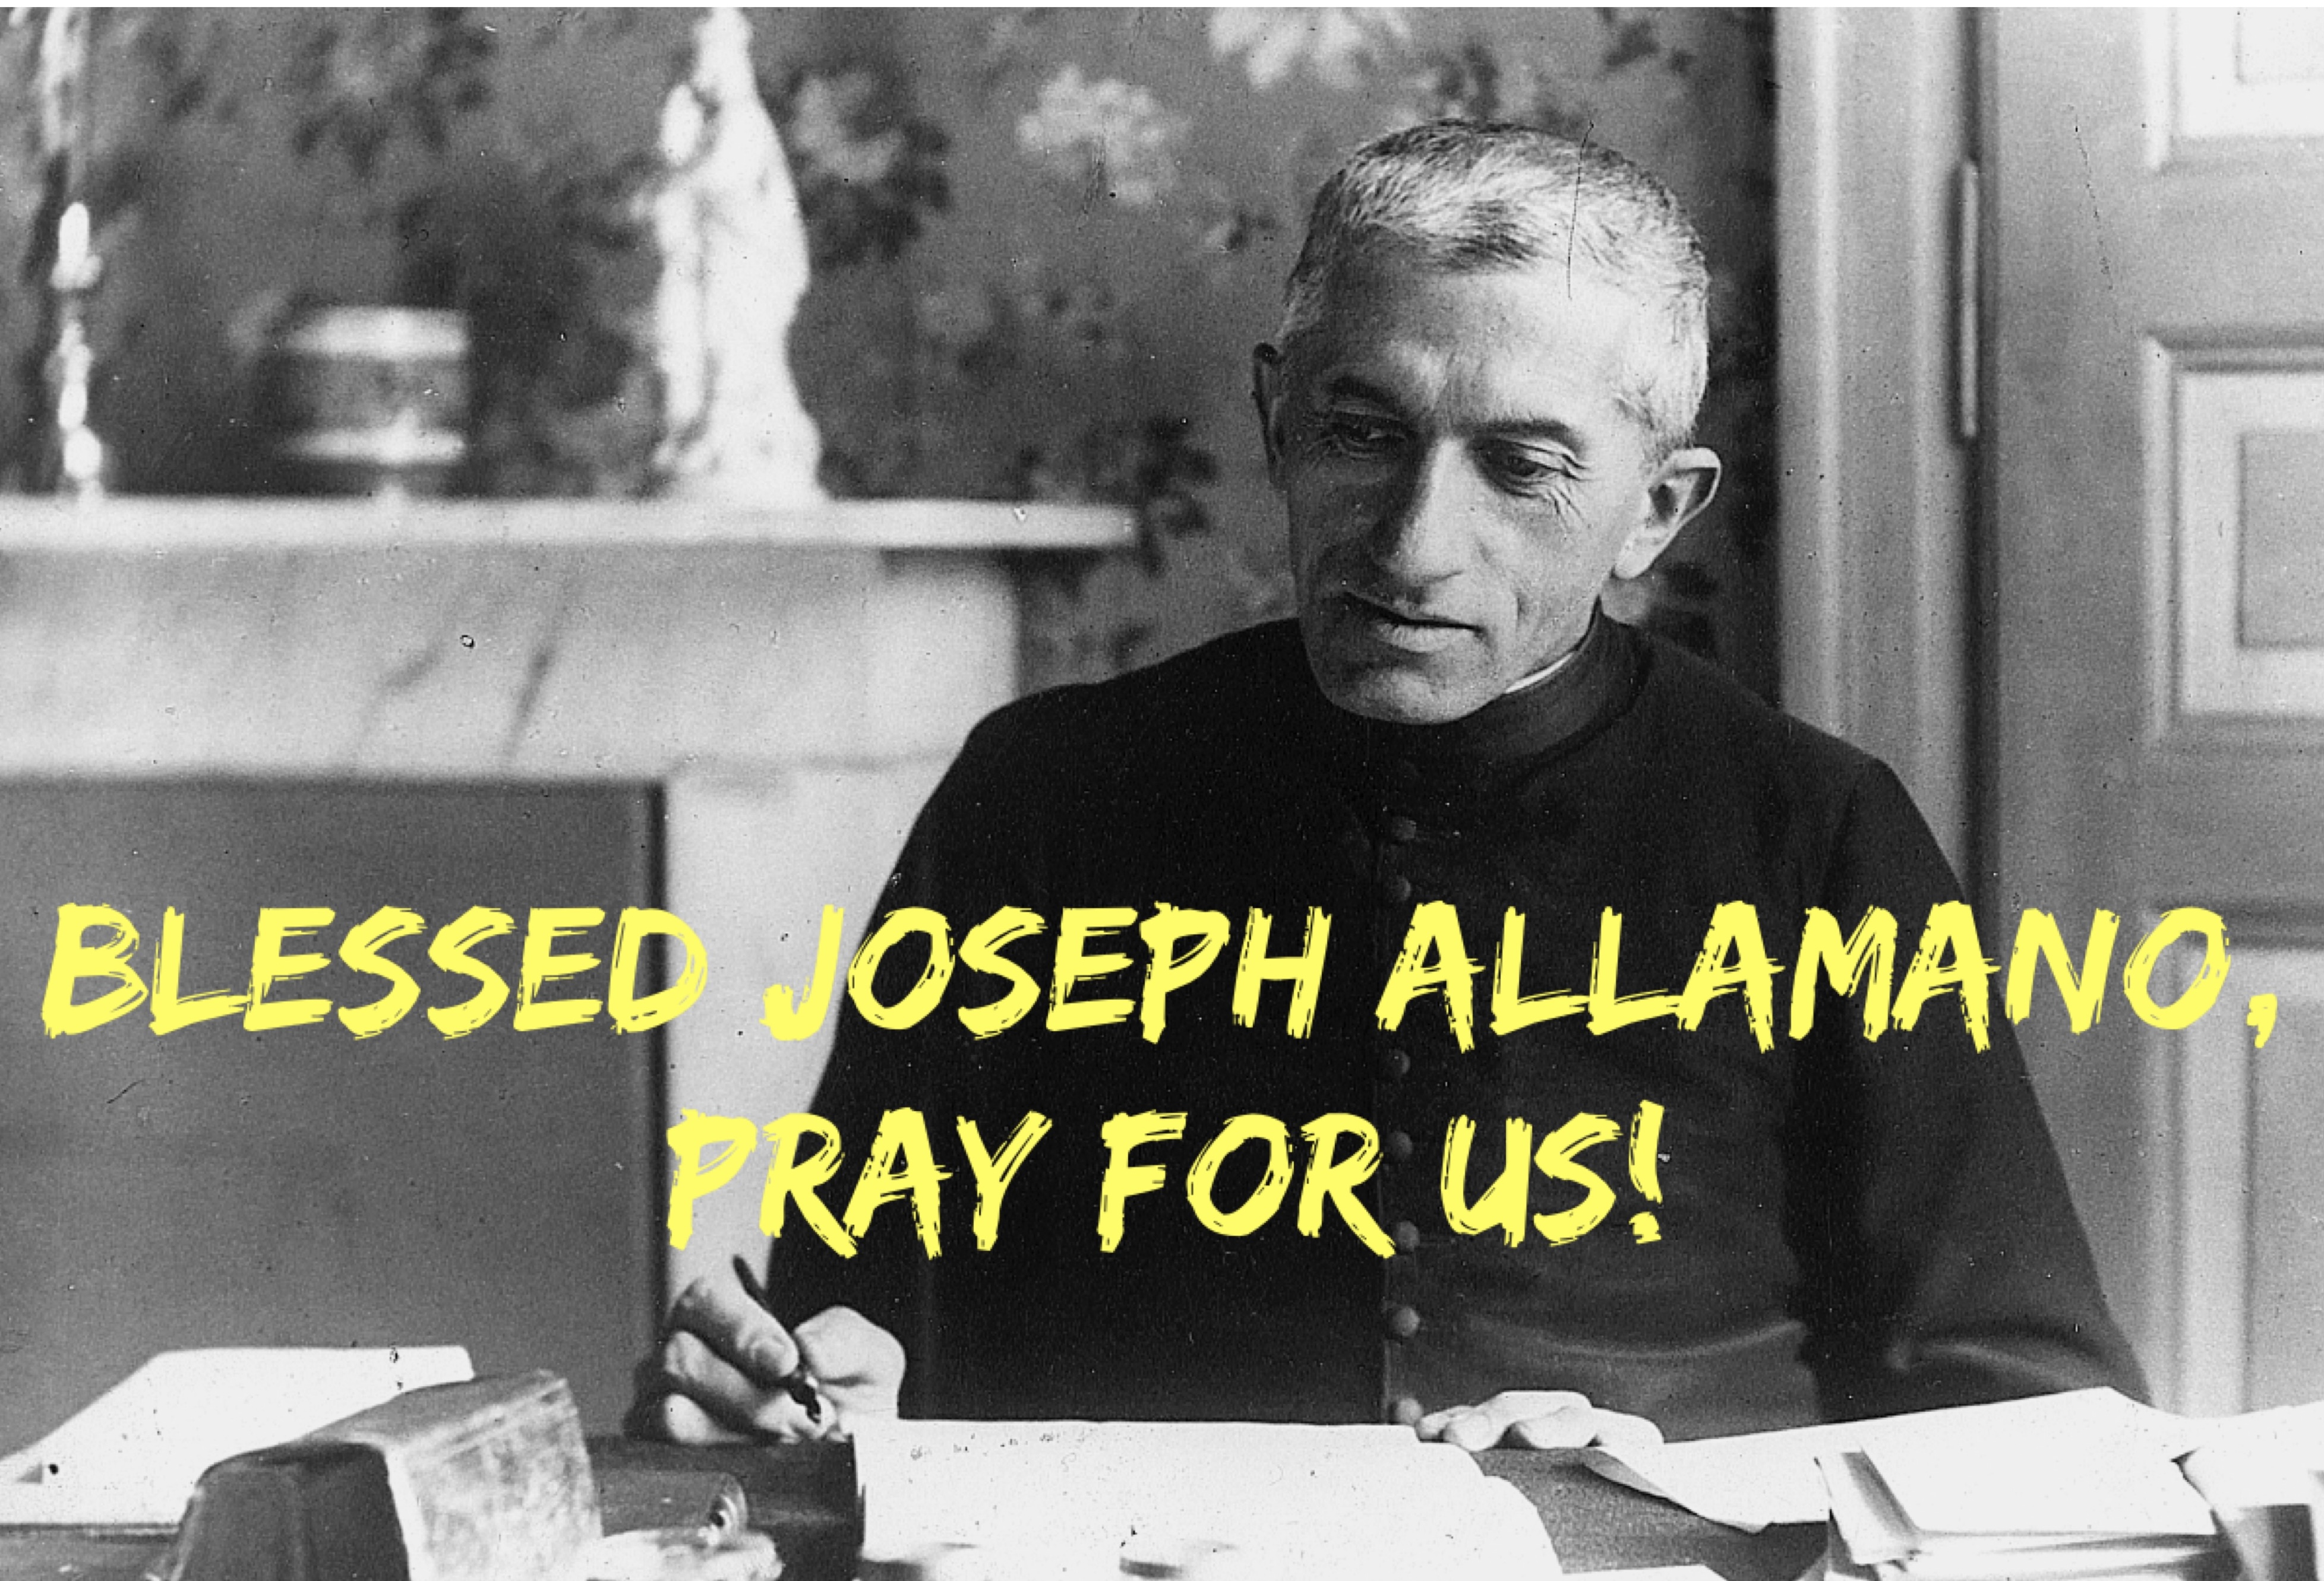 16th February – Blessed Joseph Allamano